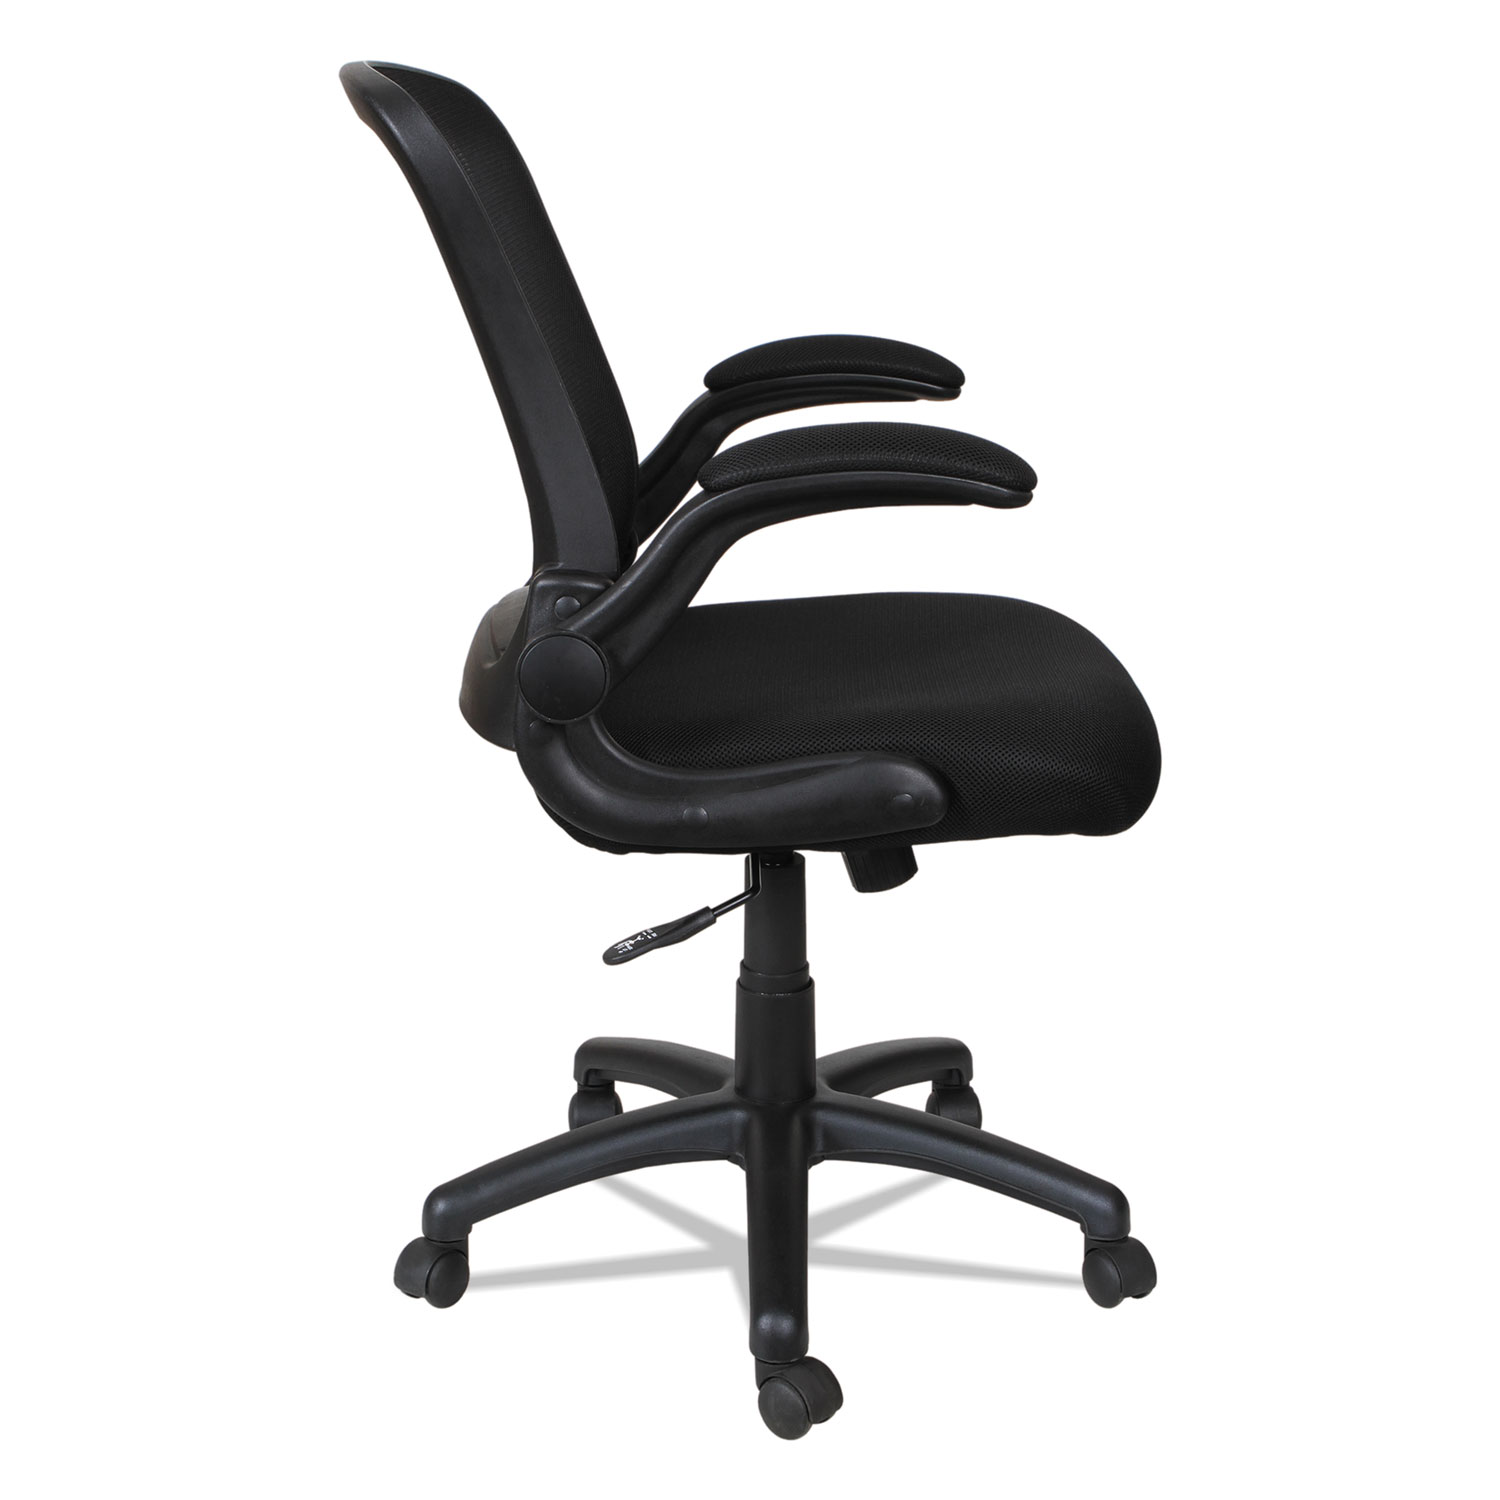  Alera ALEEBE4217 Alera EB-E Series Swivel/Tilt Mid-Back Mesh Chair, Supports up to 275 lbs., Black Seat/Black Back, Black Base (ALEEBE4217) 